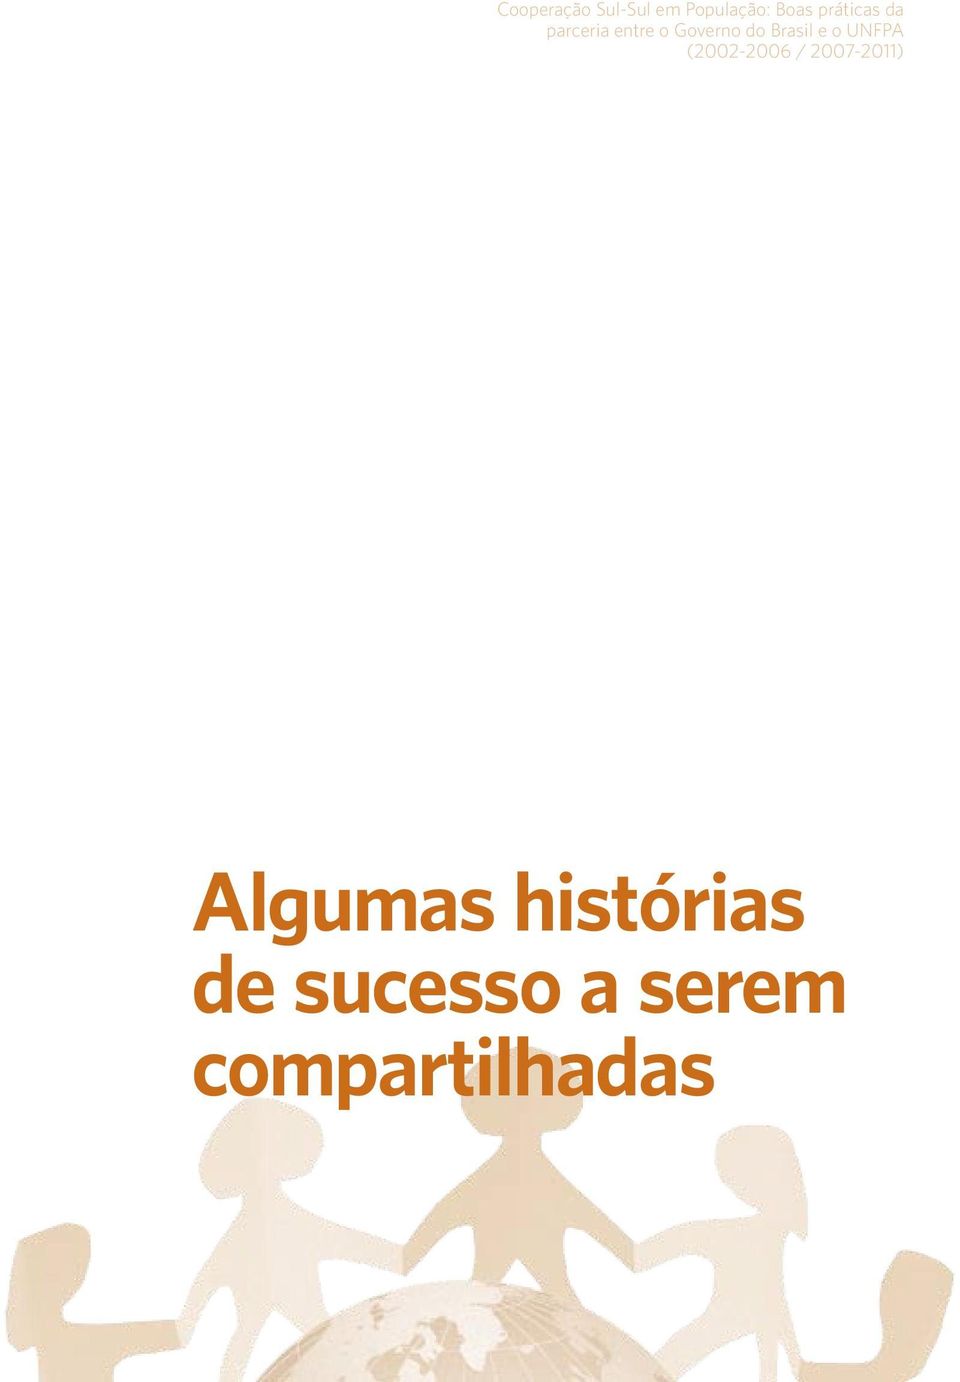 Brasil e o UNFPA (2002-2006 / 2007-2011)